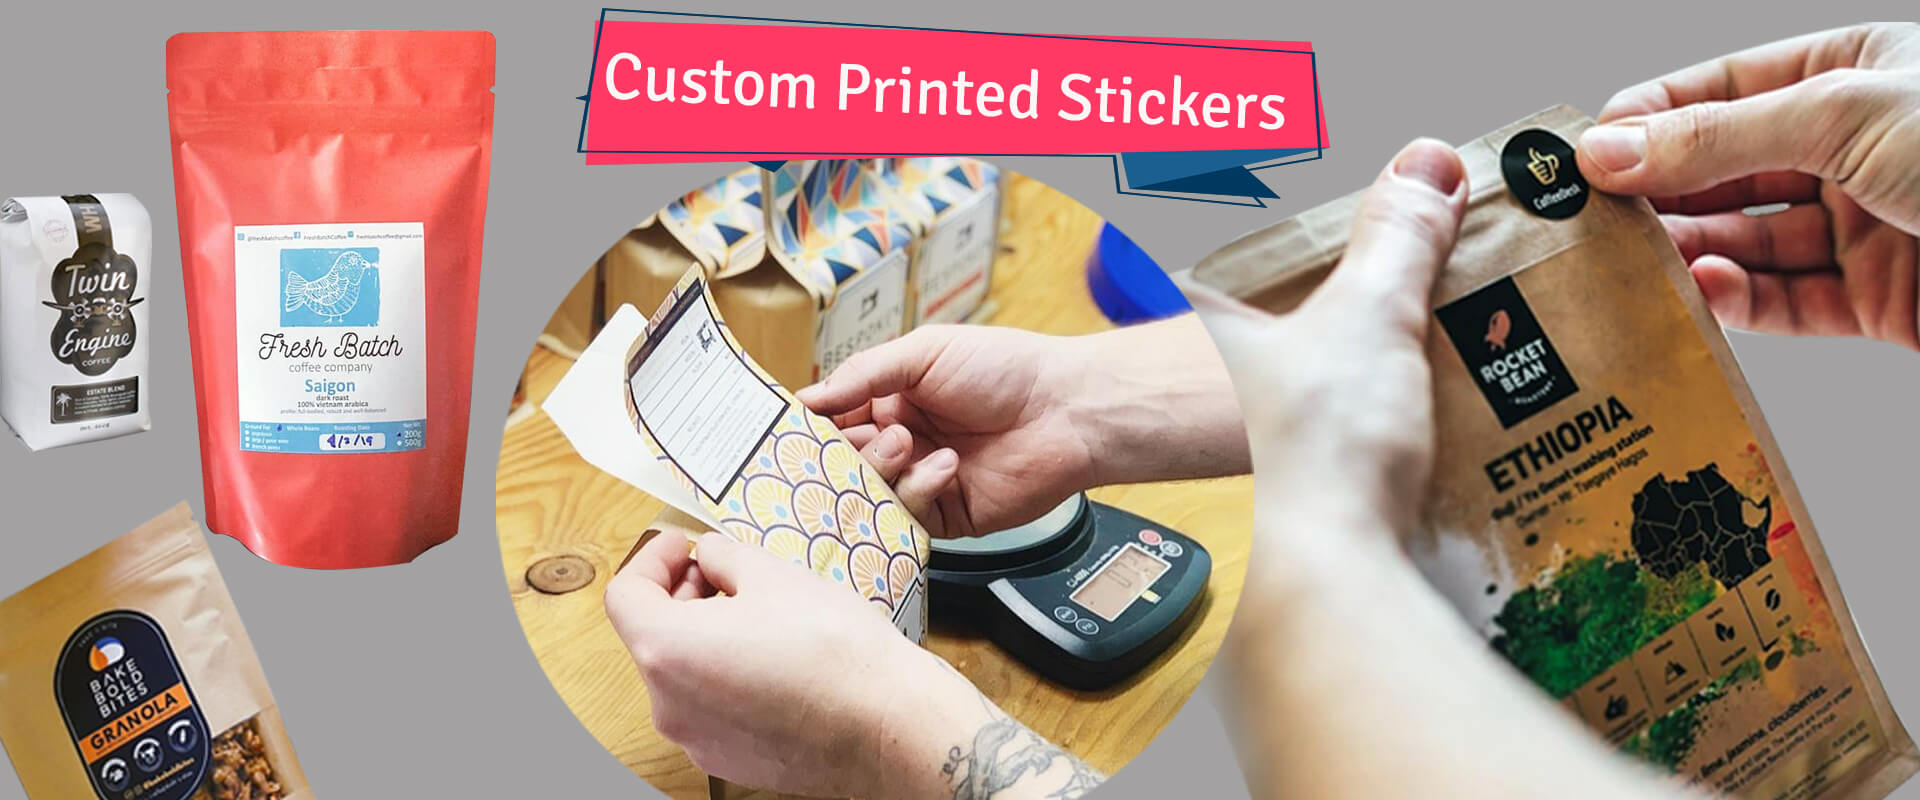 Custom Printed Sticker